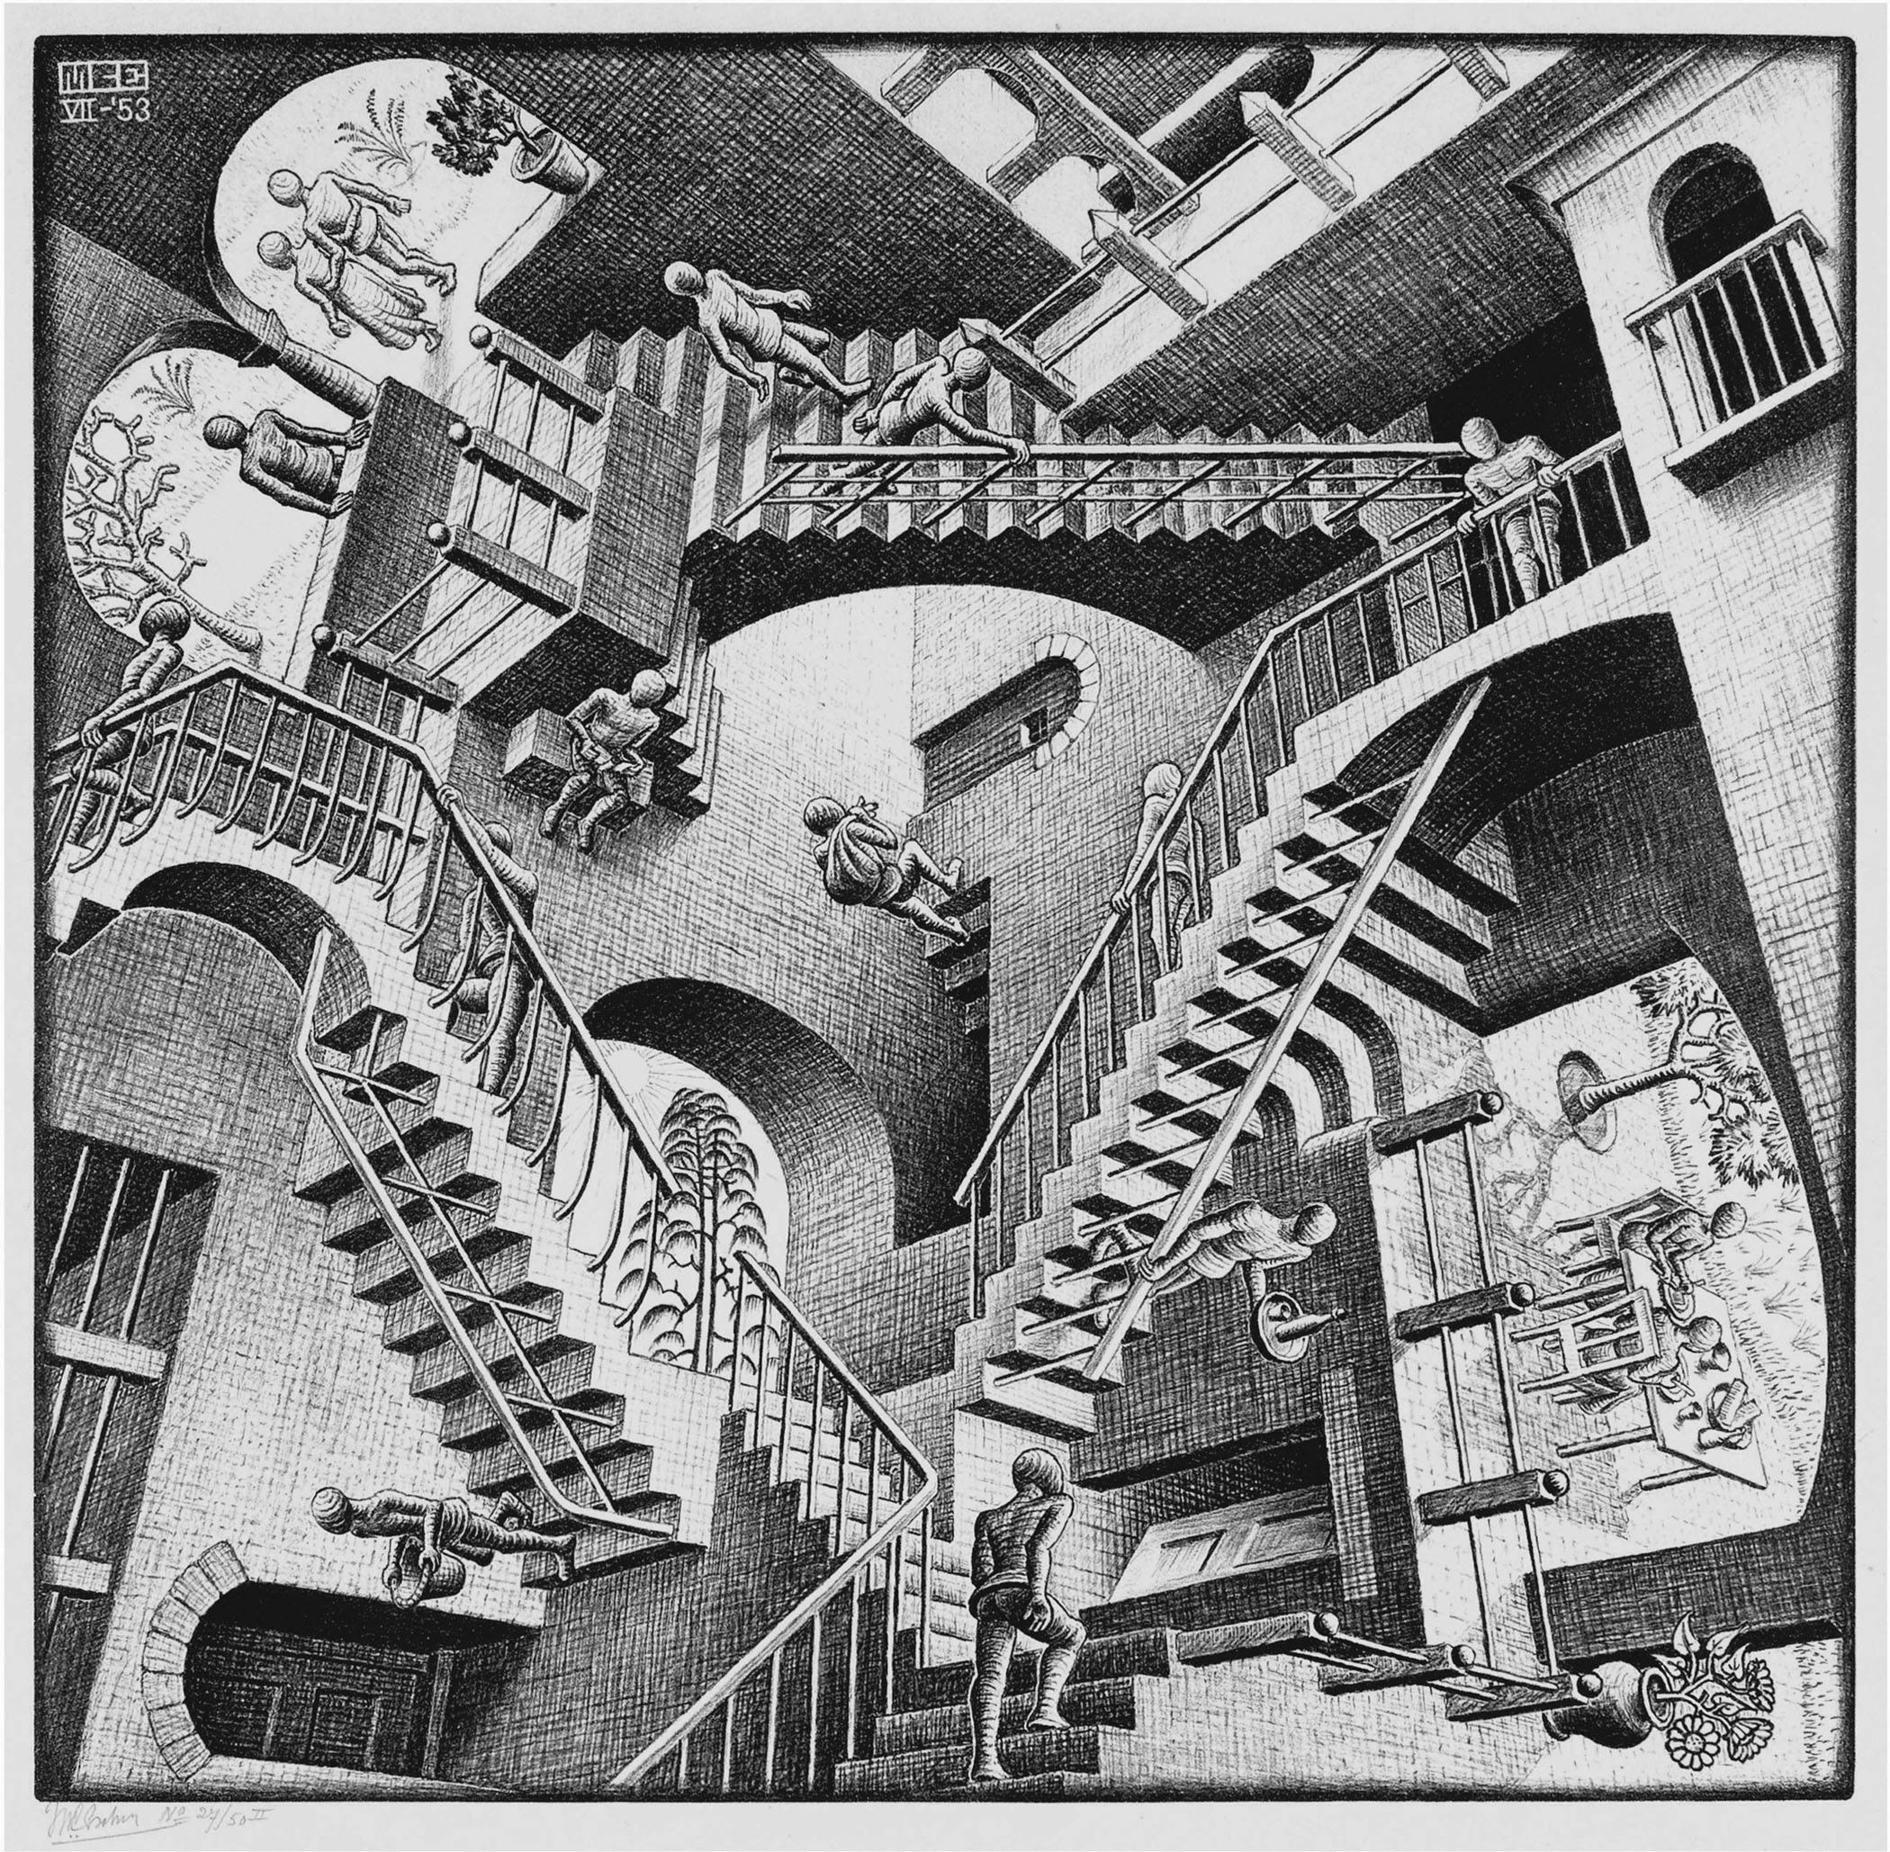 The Impossible World of M.C. Escher. New Hampshire Public Radio